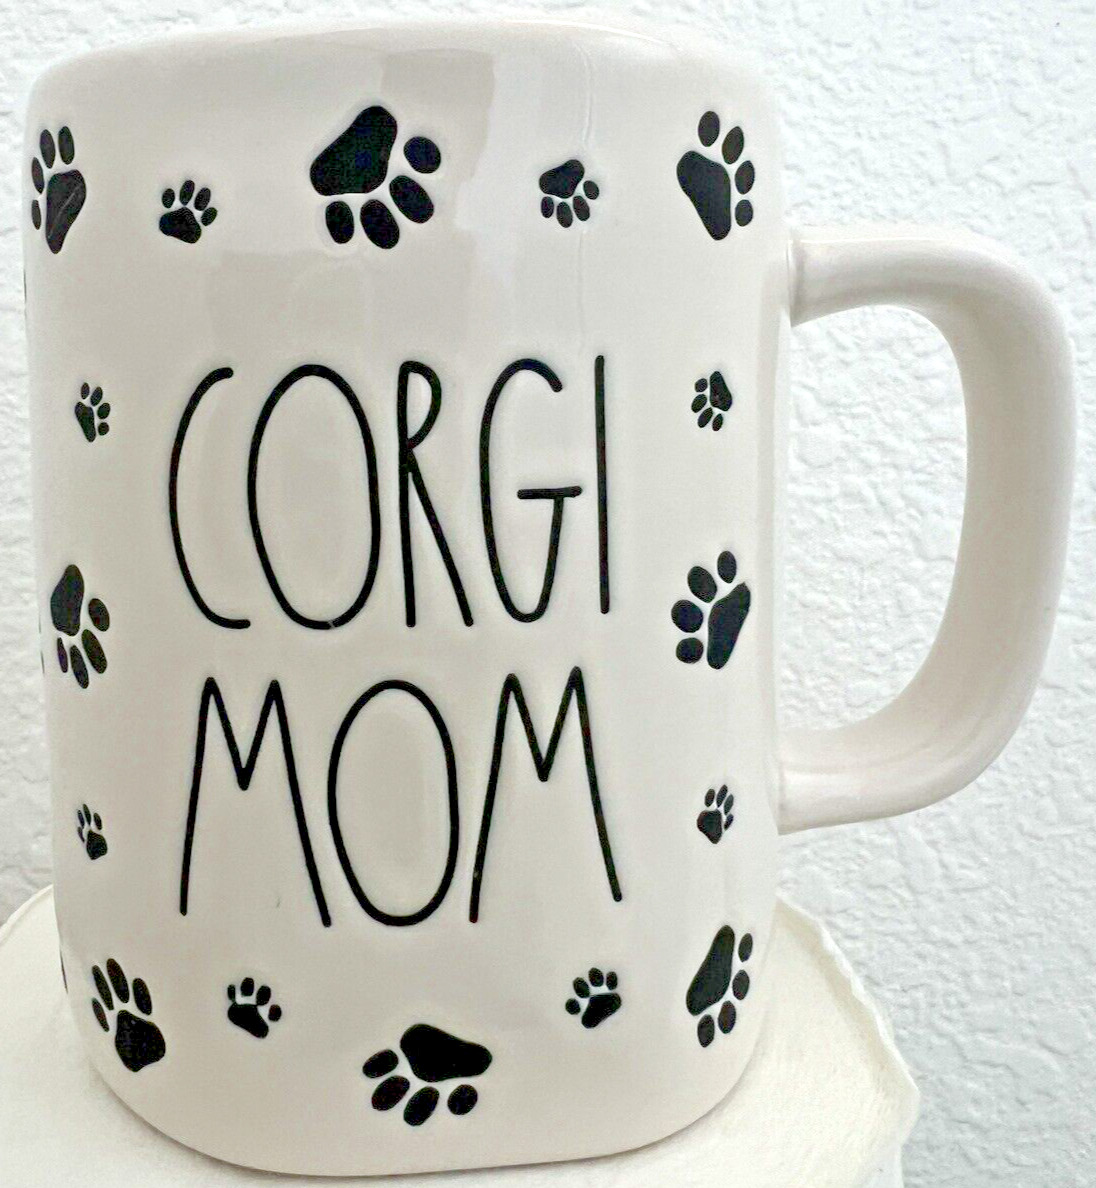 Corgi Mom Ceramic Mug Artisan Collection by Magenta White With Black Paw Print